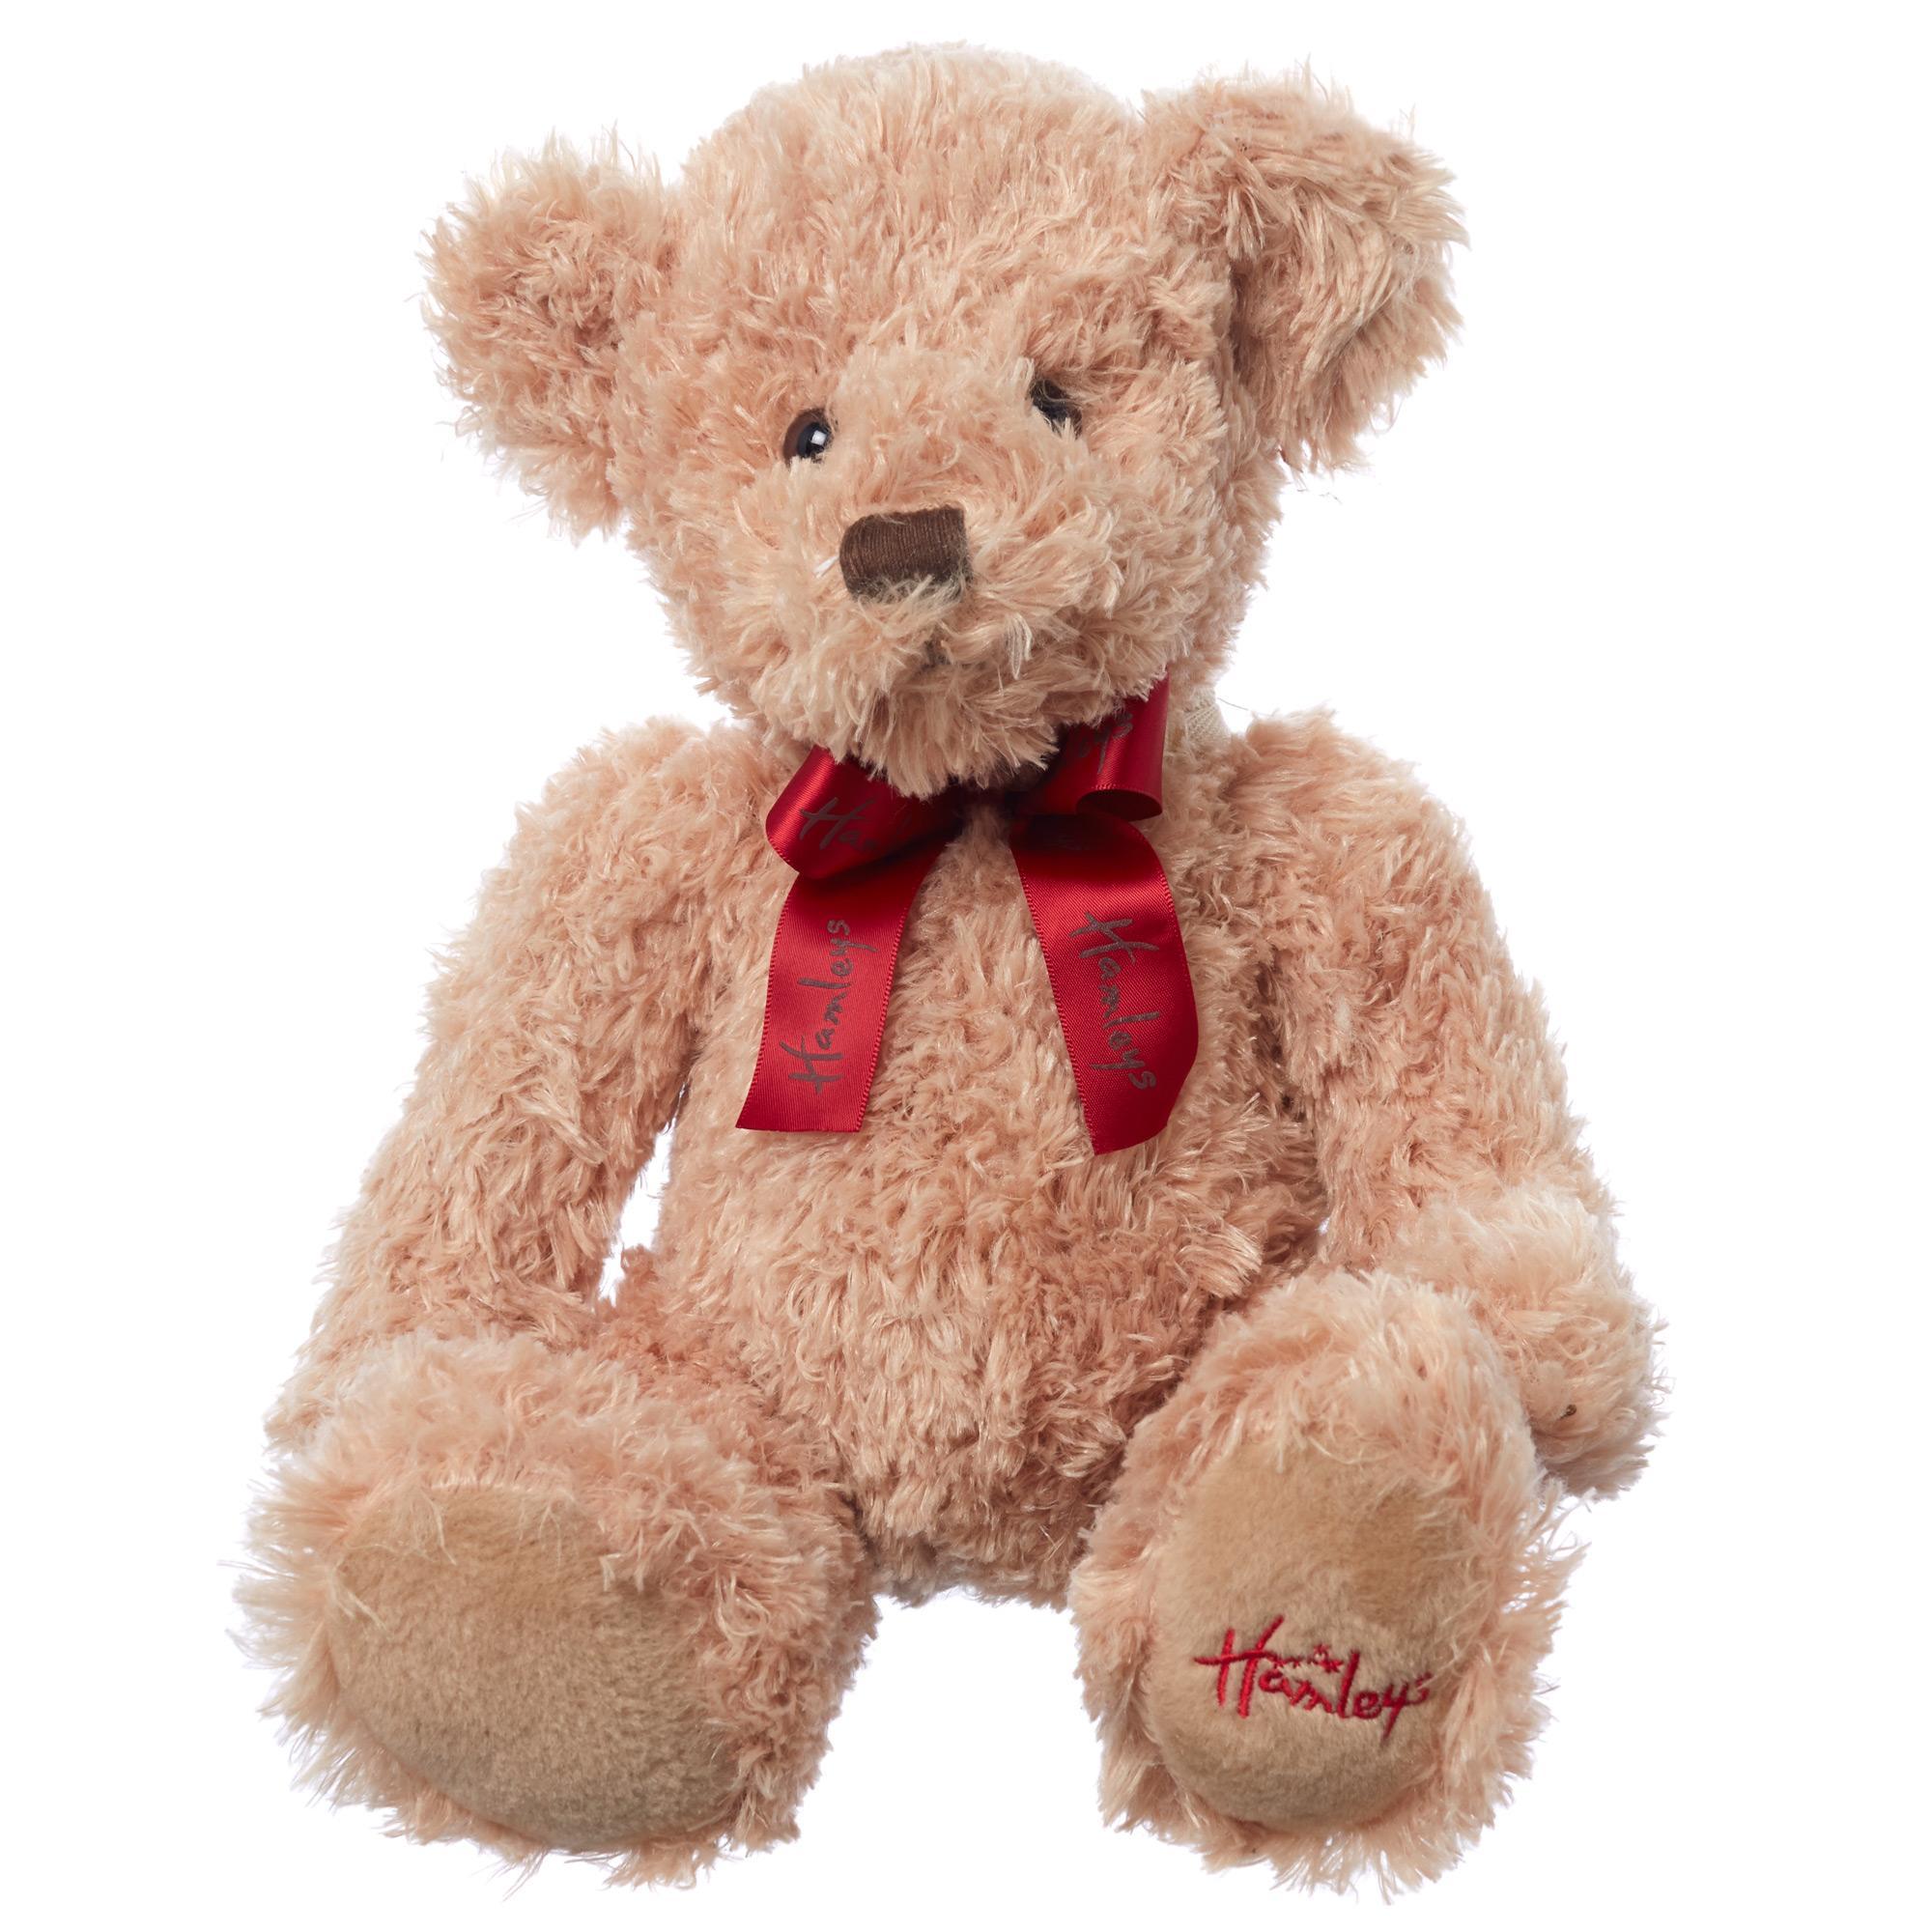 Teddy Bear Image